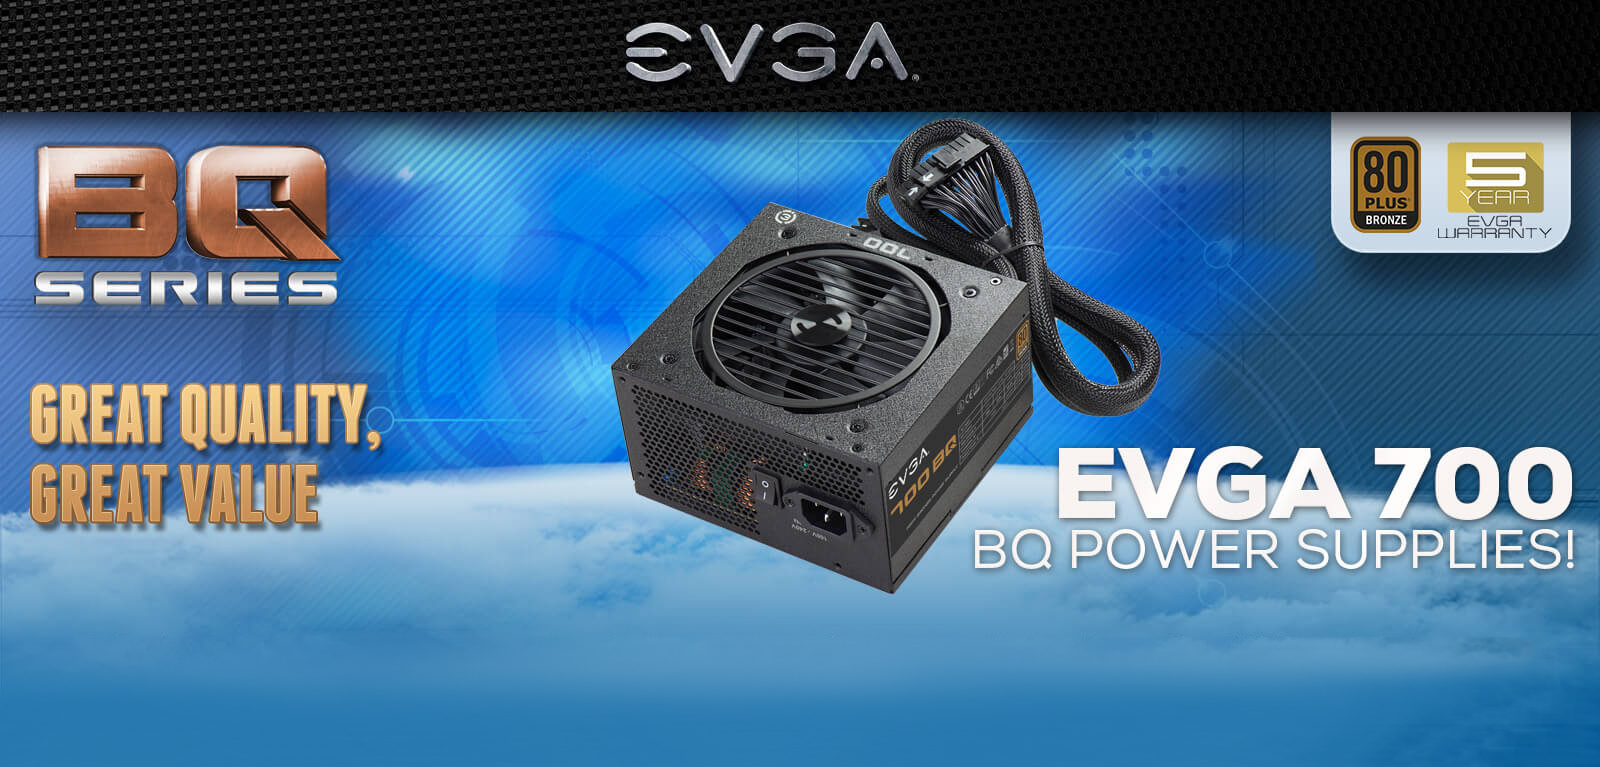 EVGA 700 BQ Semi Modular facing forward and EVGA logo